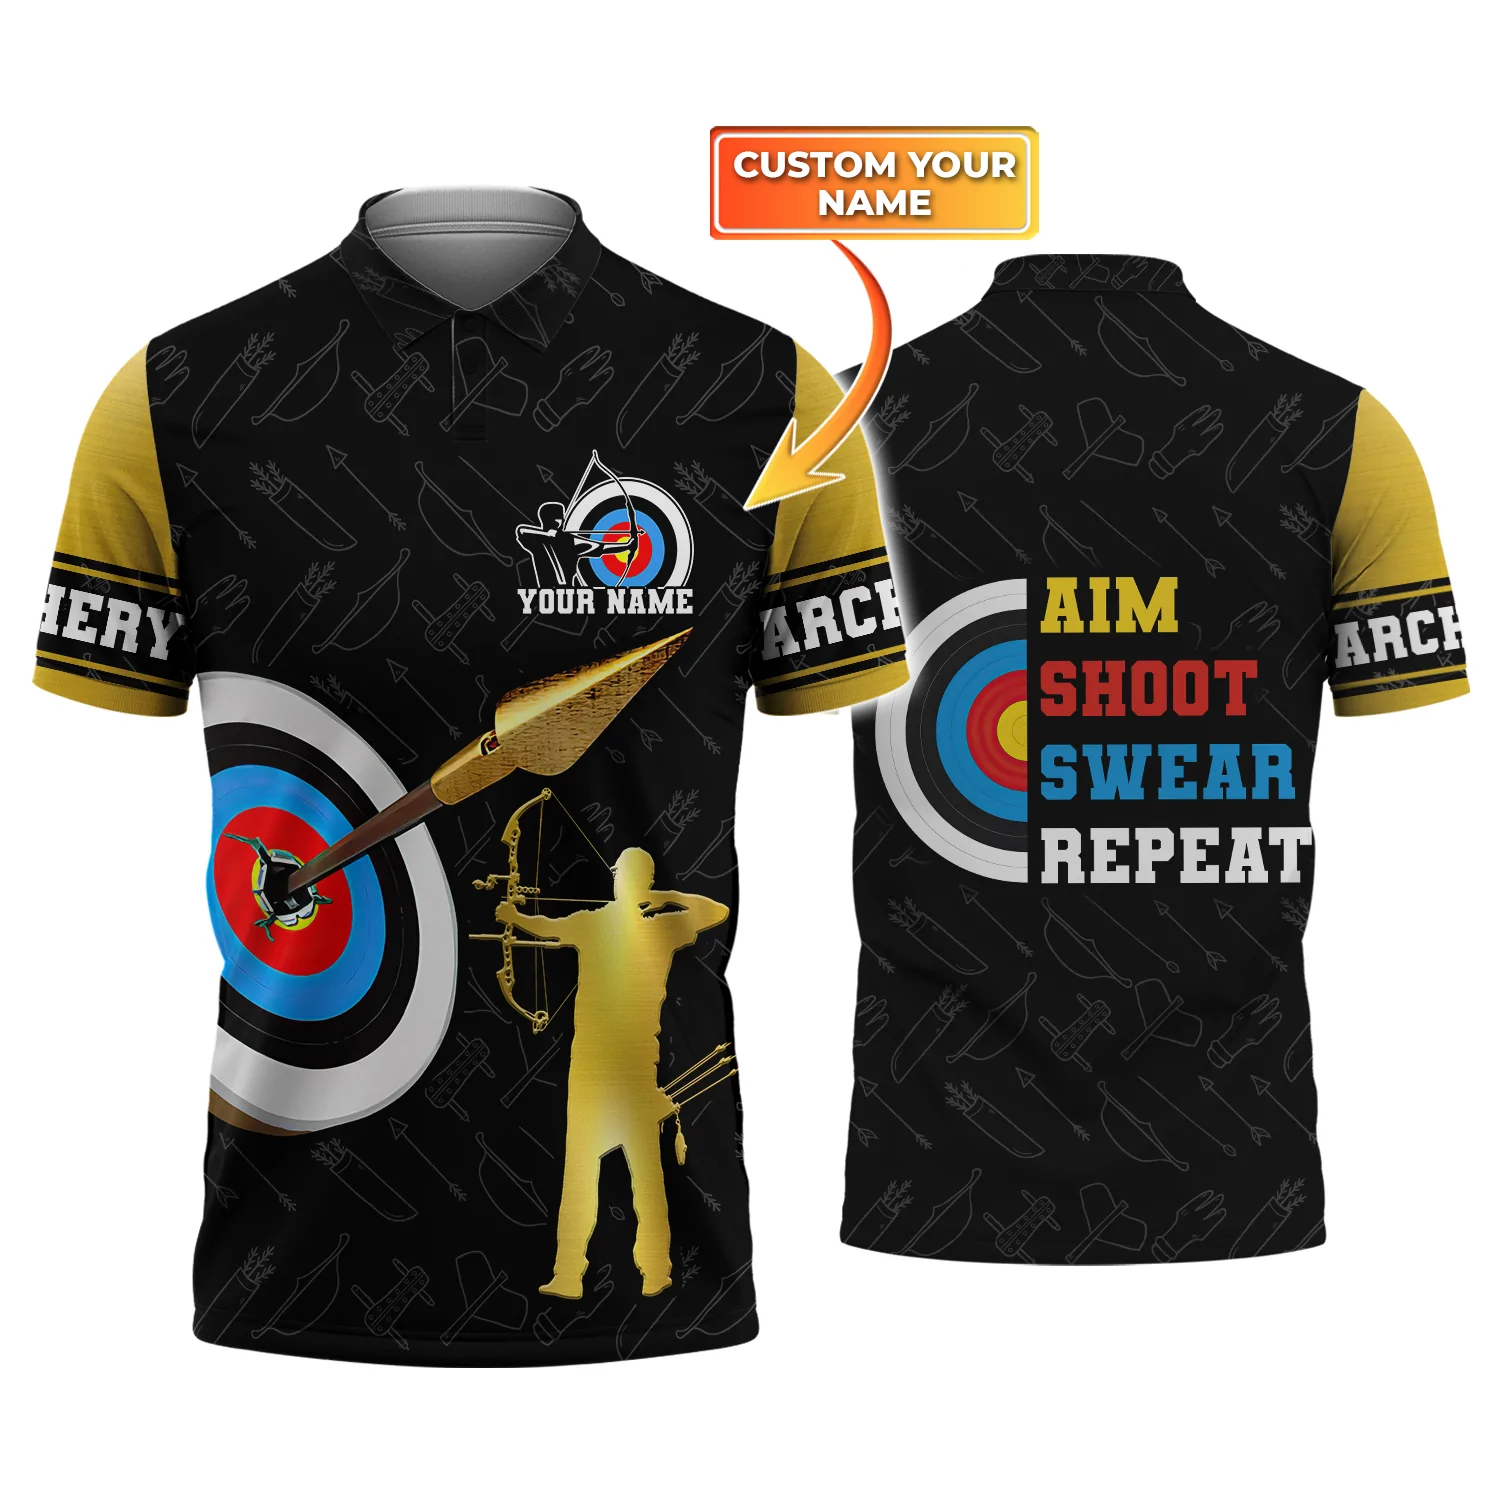 Green Archery Polo Shirt Customize Name For Men/ Women/ Archery Shirts/ Archery Gifts